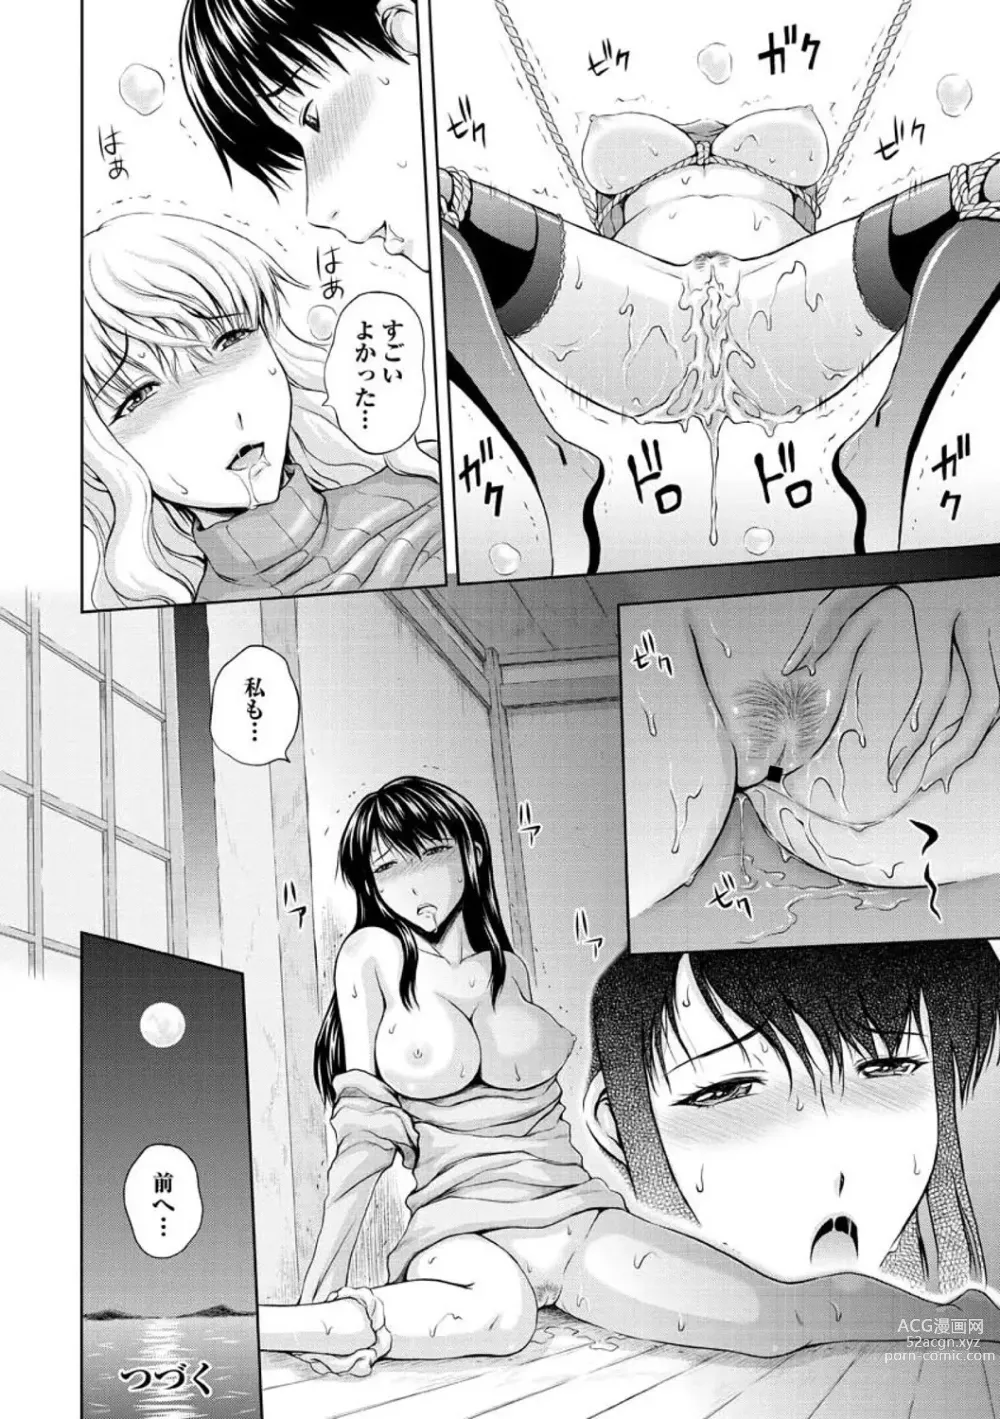 Page 28 of manga Inbaku no Wakazuma